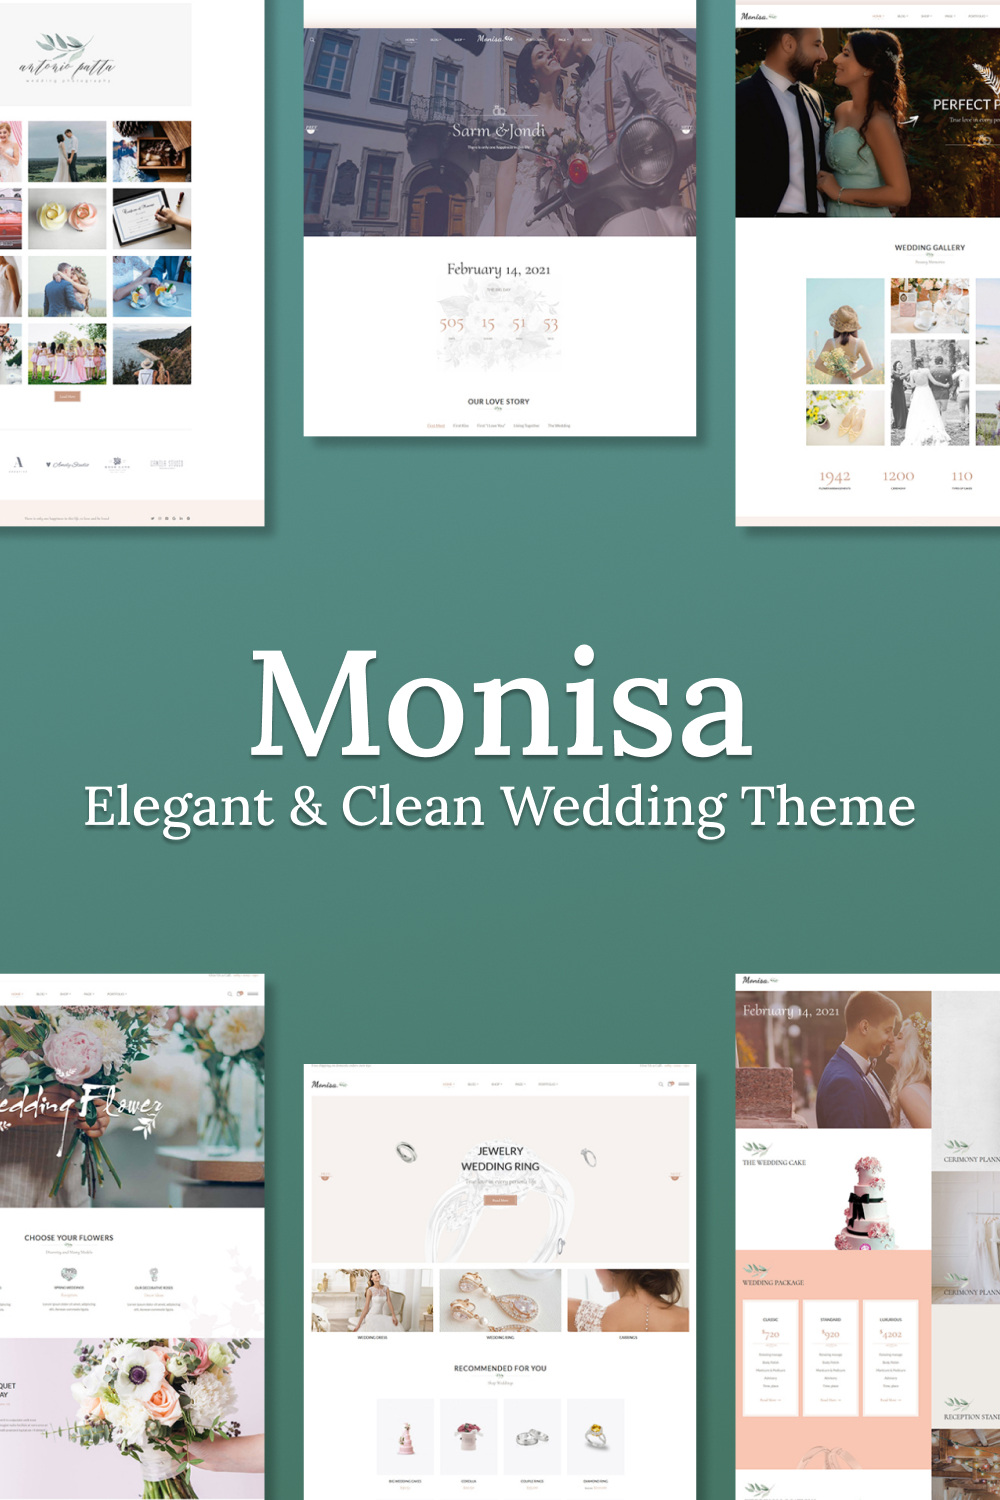 Illustrations monisa elegant clean wedding theme of pinterest.